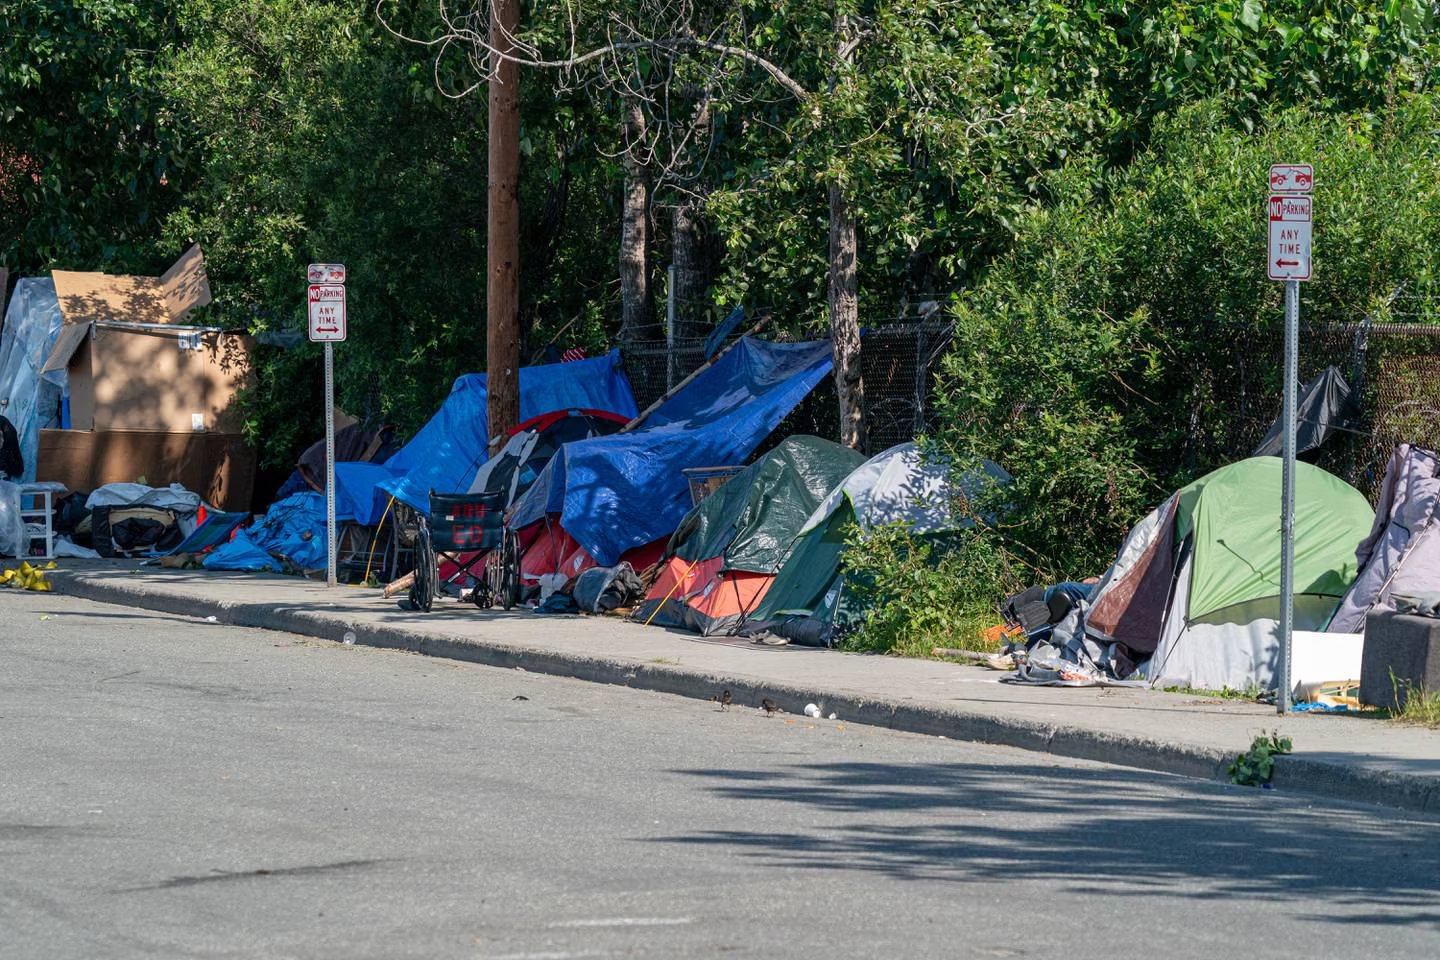 tents along the sidewalk